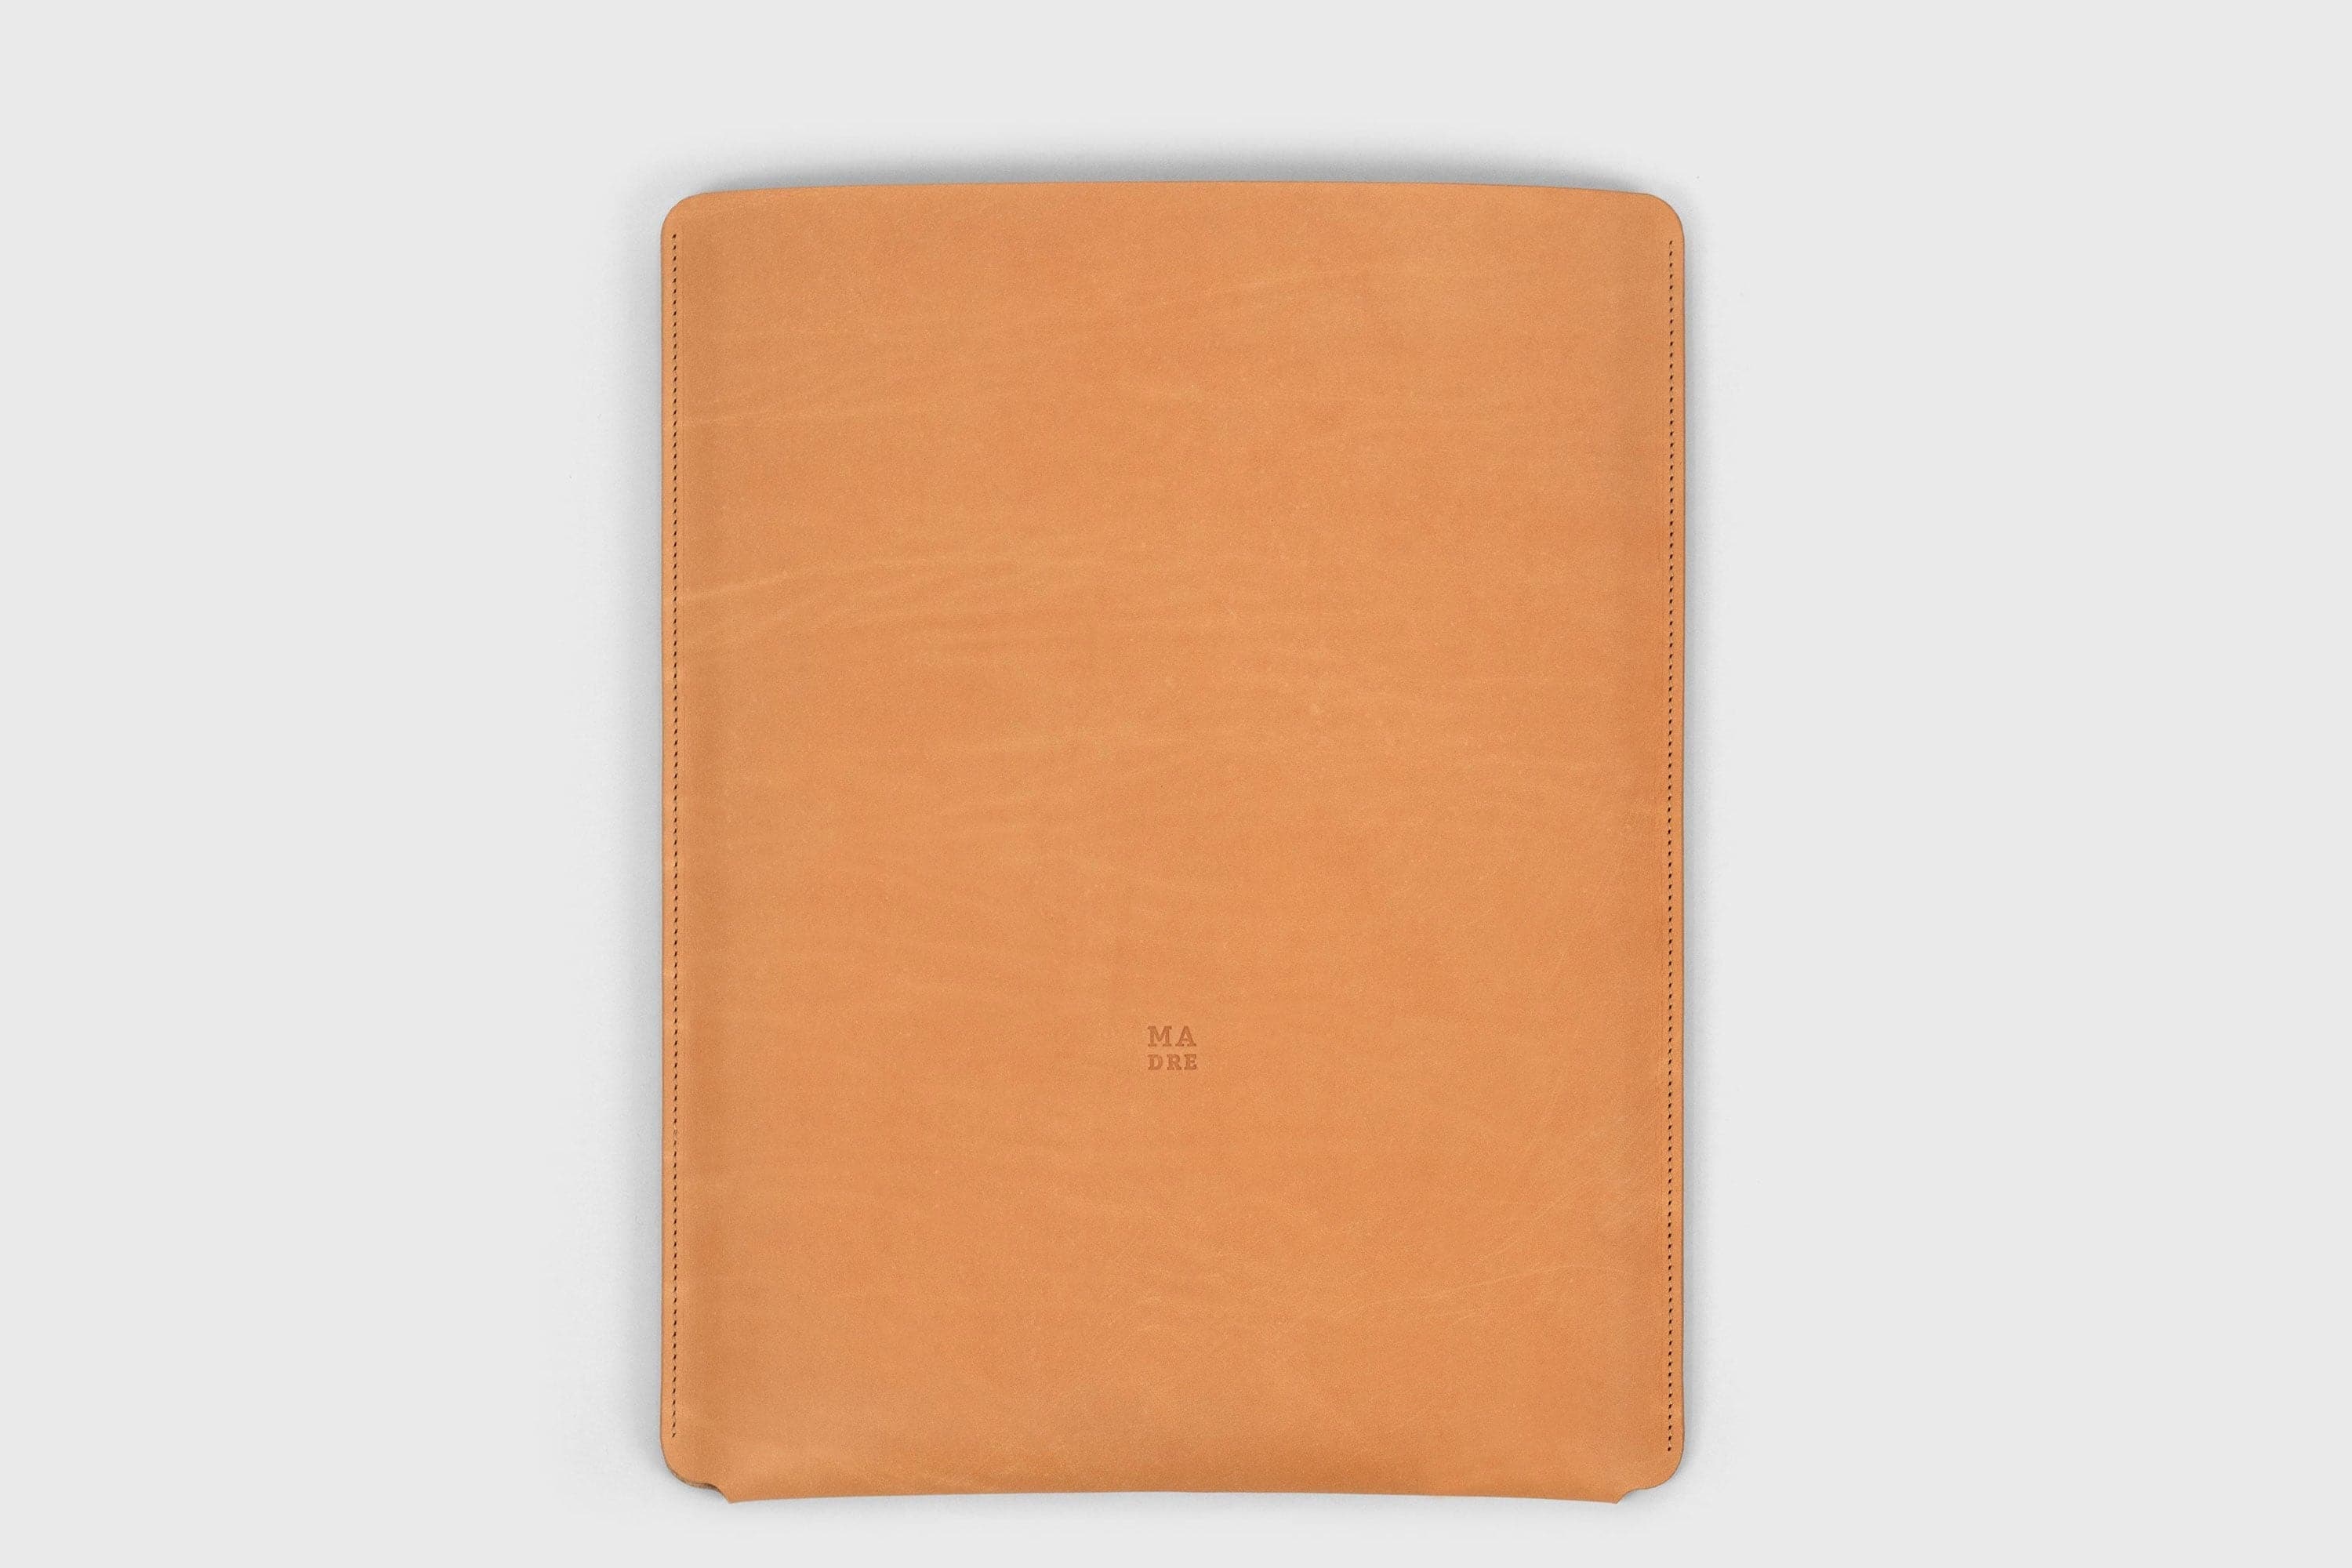 MacBook 14 Inch Sleeve Leather Slip Case Bag Brown 2021 Manuel Dreesmann Atelier Madre Barcelona